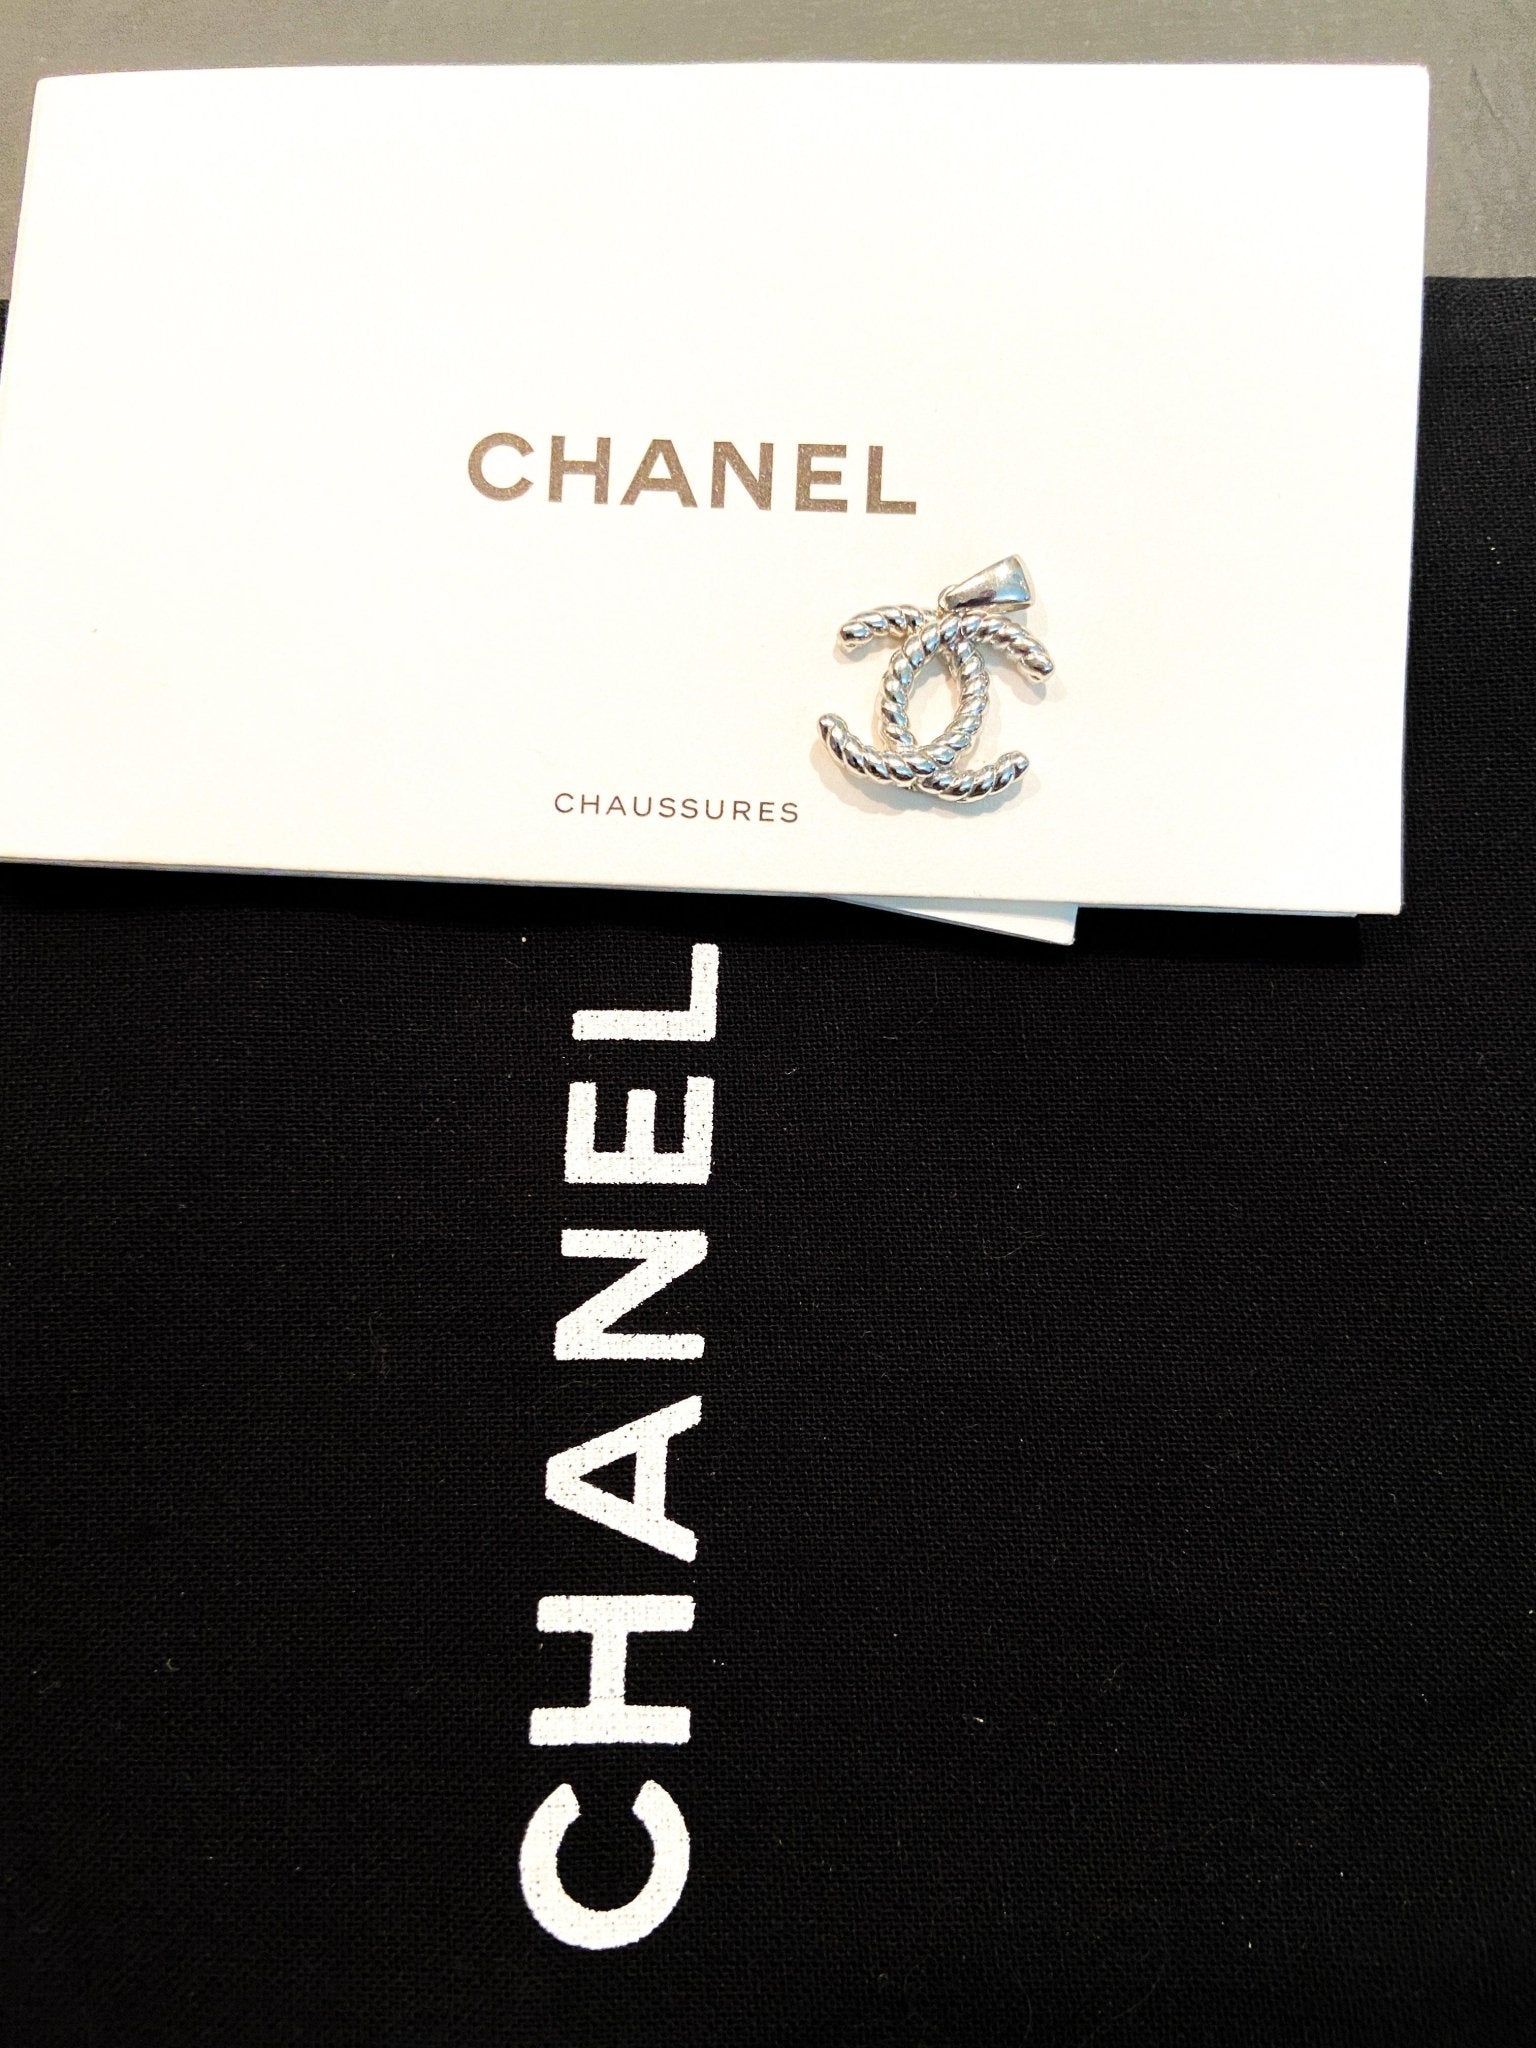 Vintage Chanel Set 925 Sterling Silver. - Tracesilver